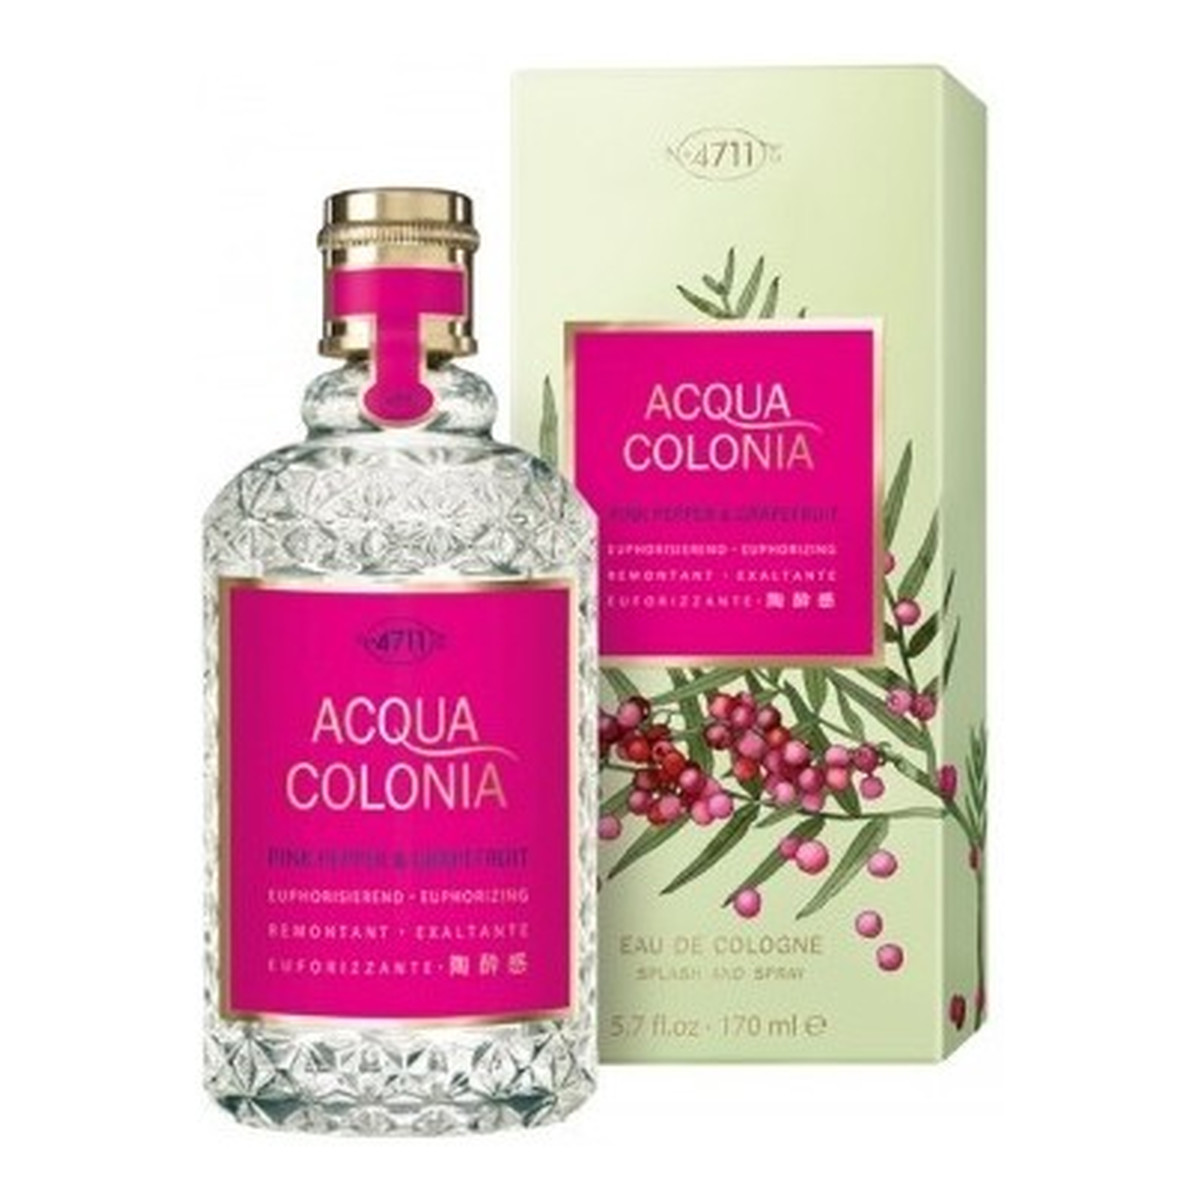 4711 Acqua Colonia Pink Pepper & Grapefruit Woda kolońska splash and spray 170ml